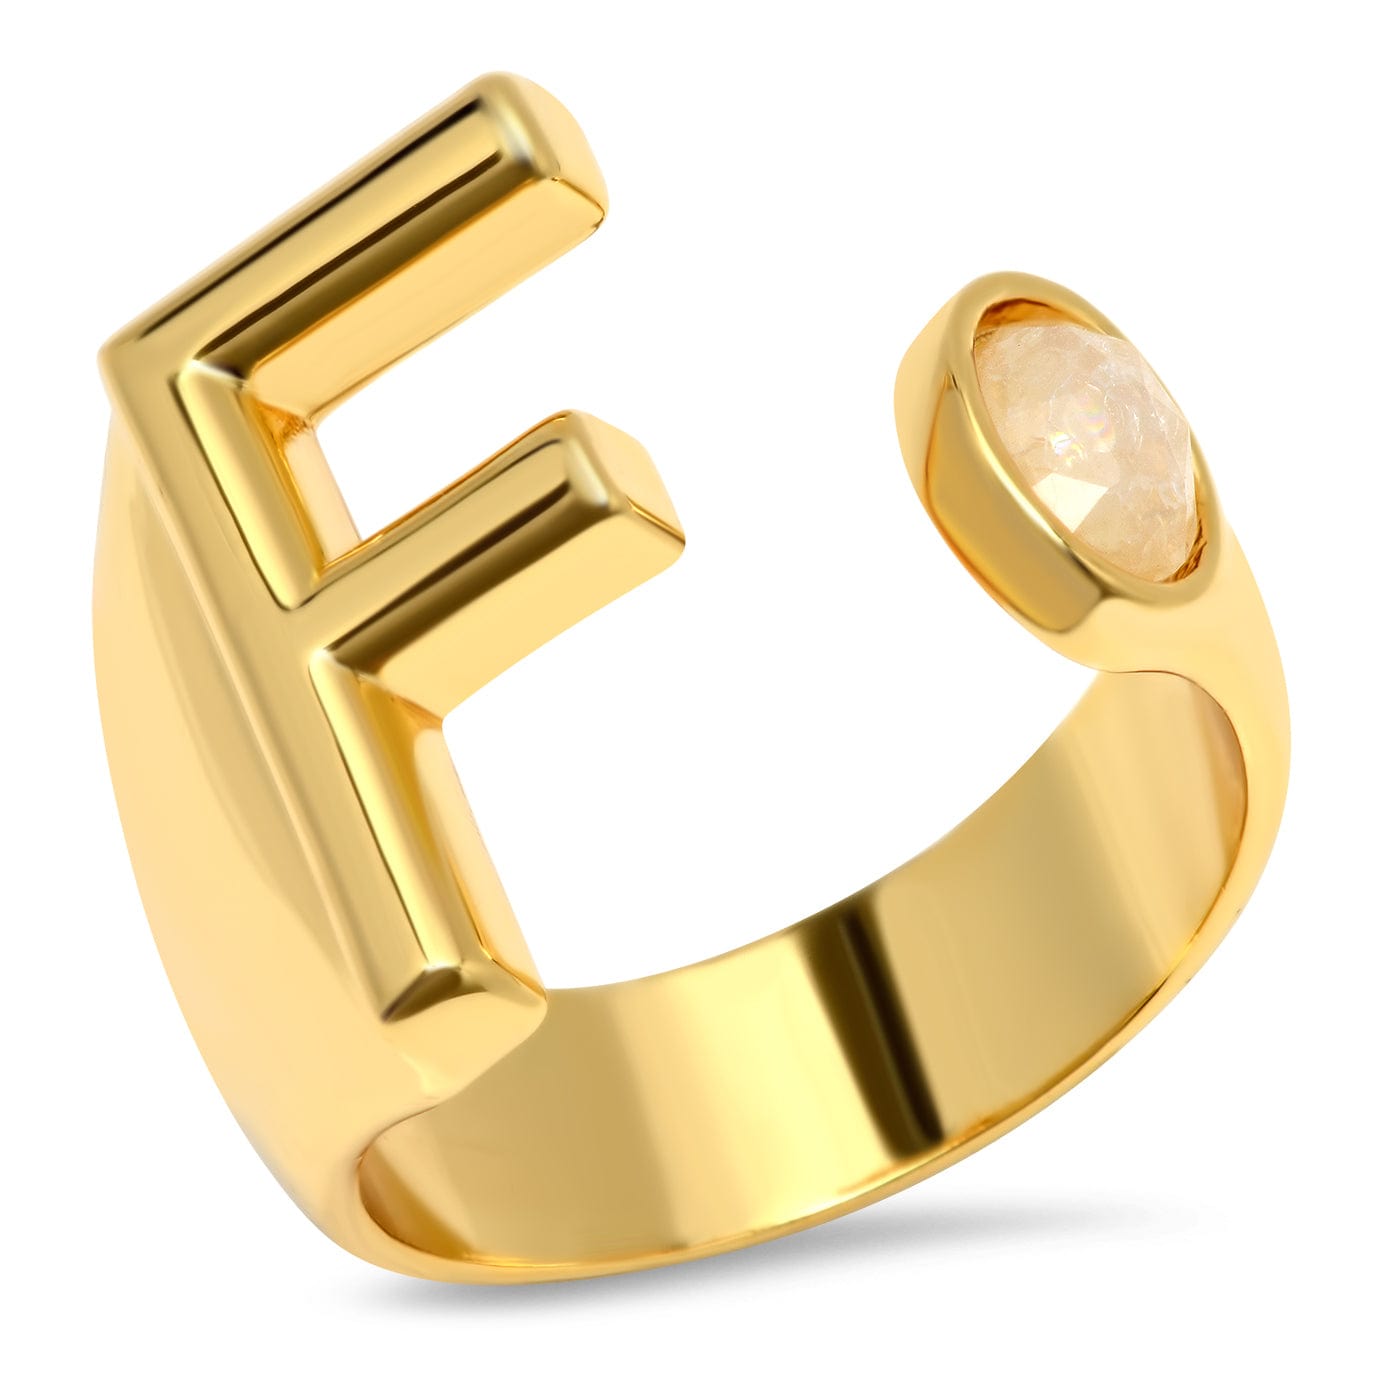 TAI JEWELRY Rings F Initial Wrap Ring